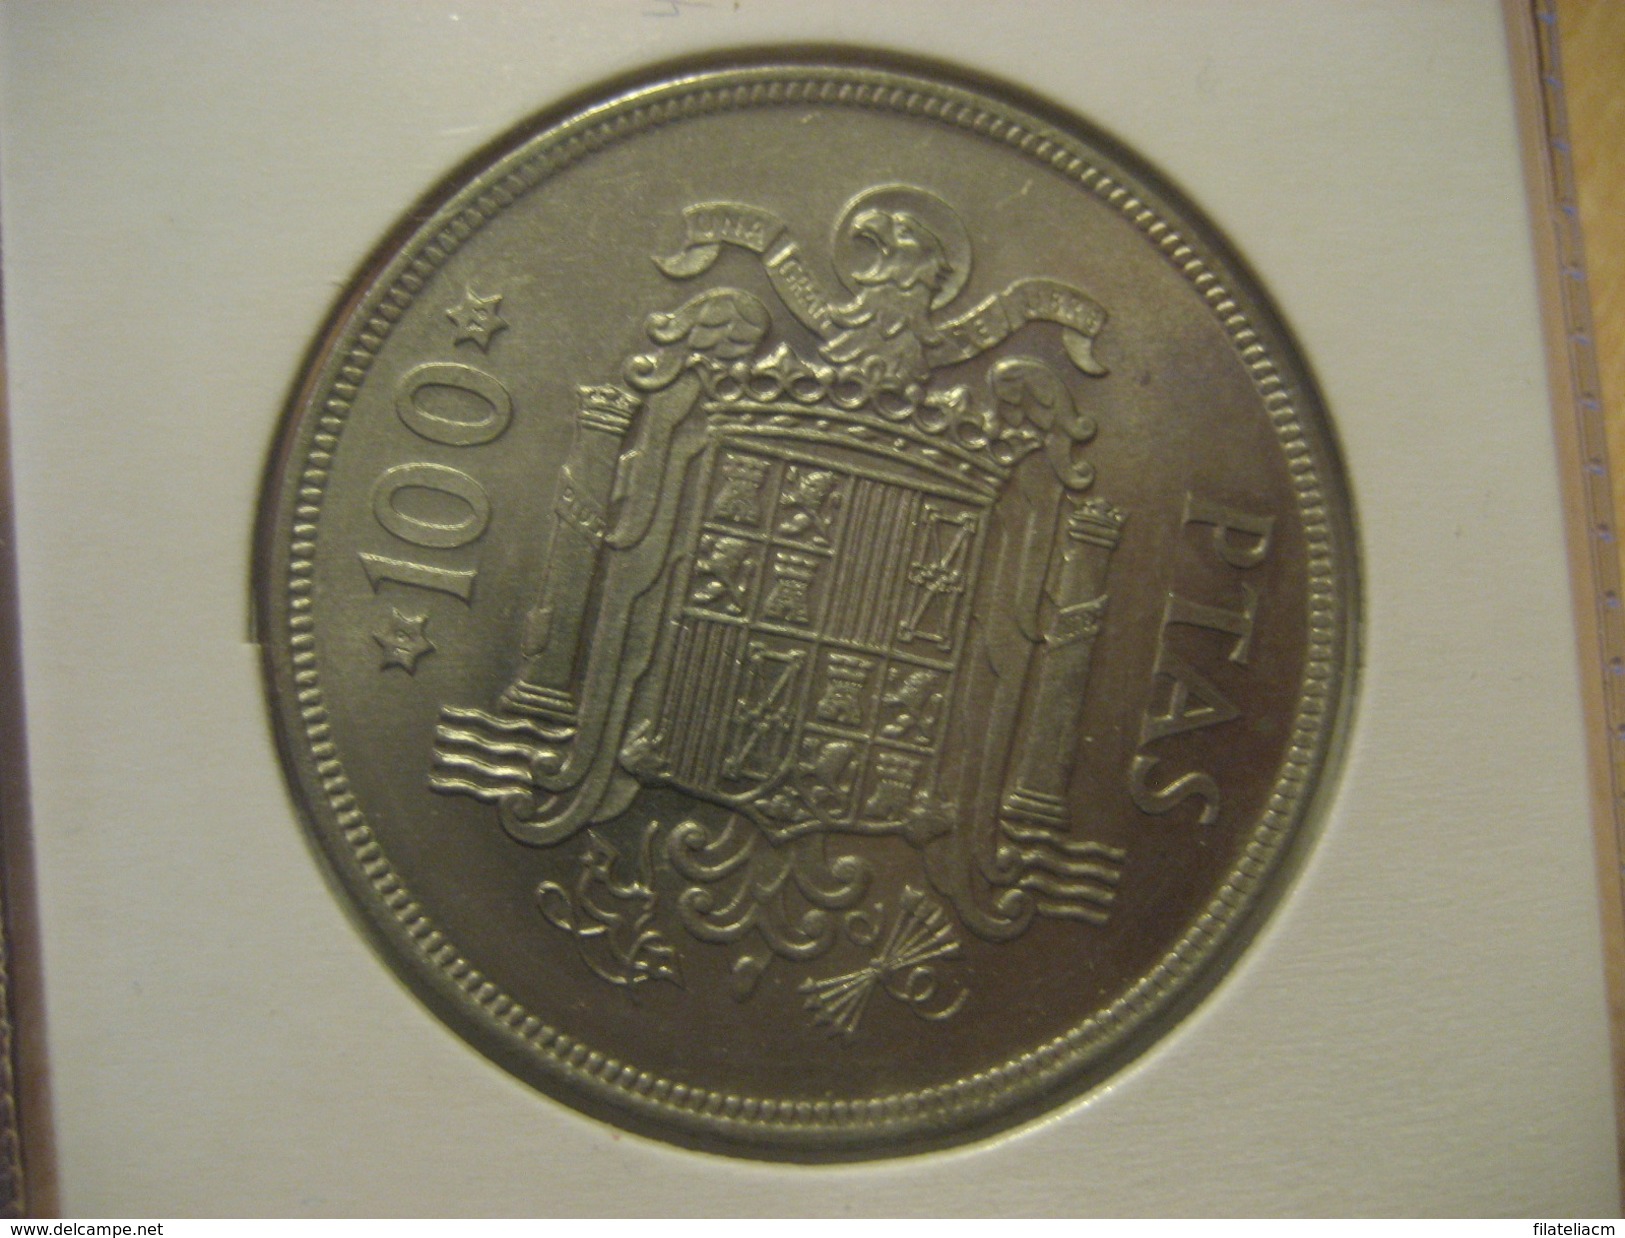 100 Pesetas 1975 (76) SPAIN Juan Carlos I Good Condition Coin - 100 Peseta